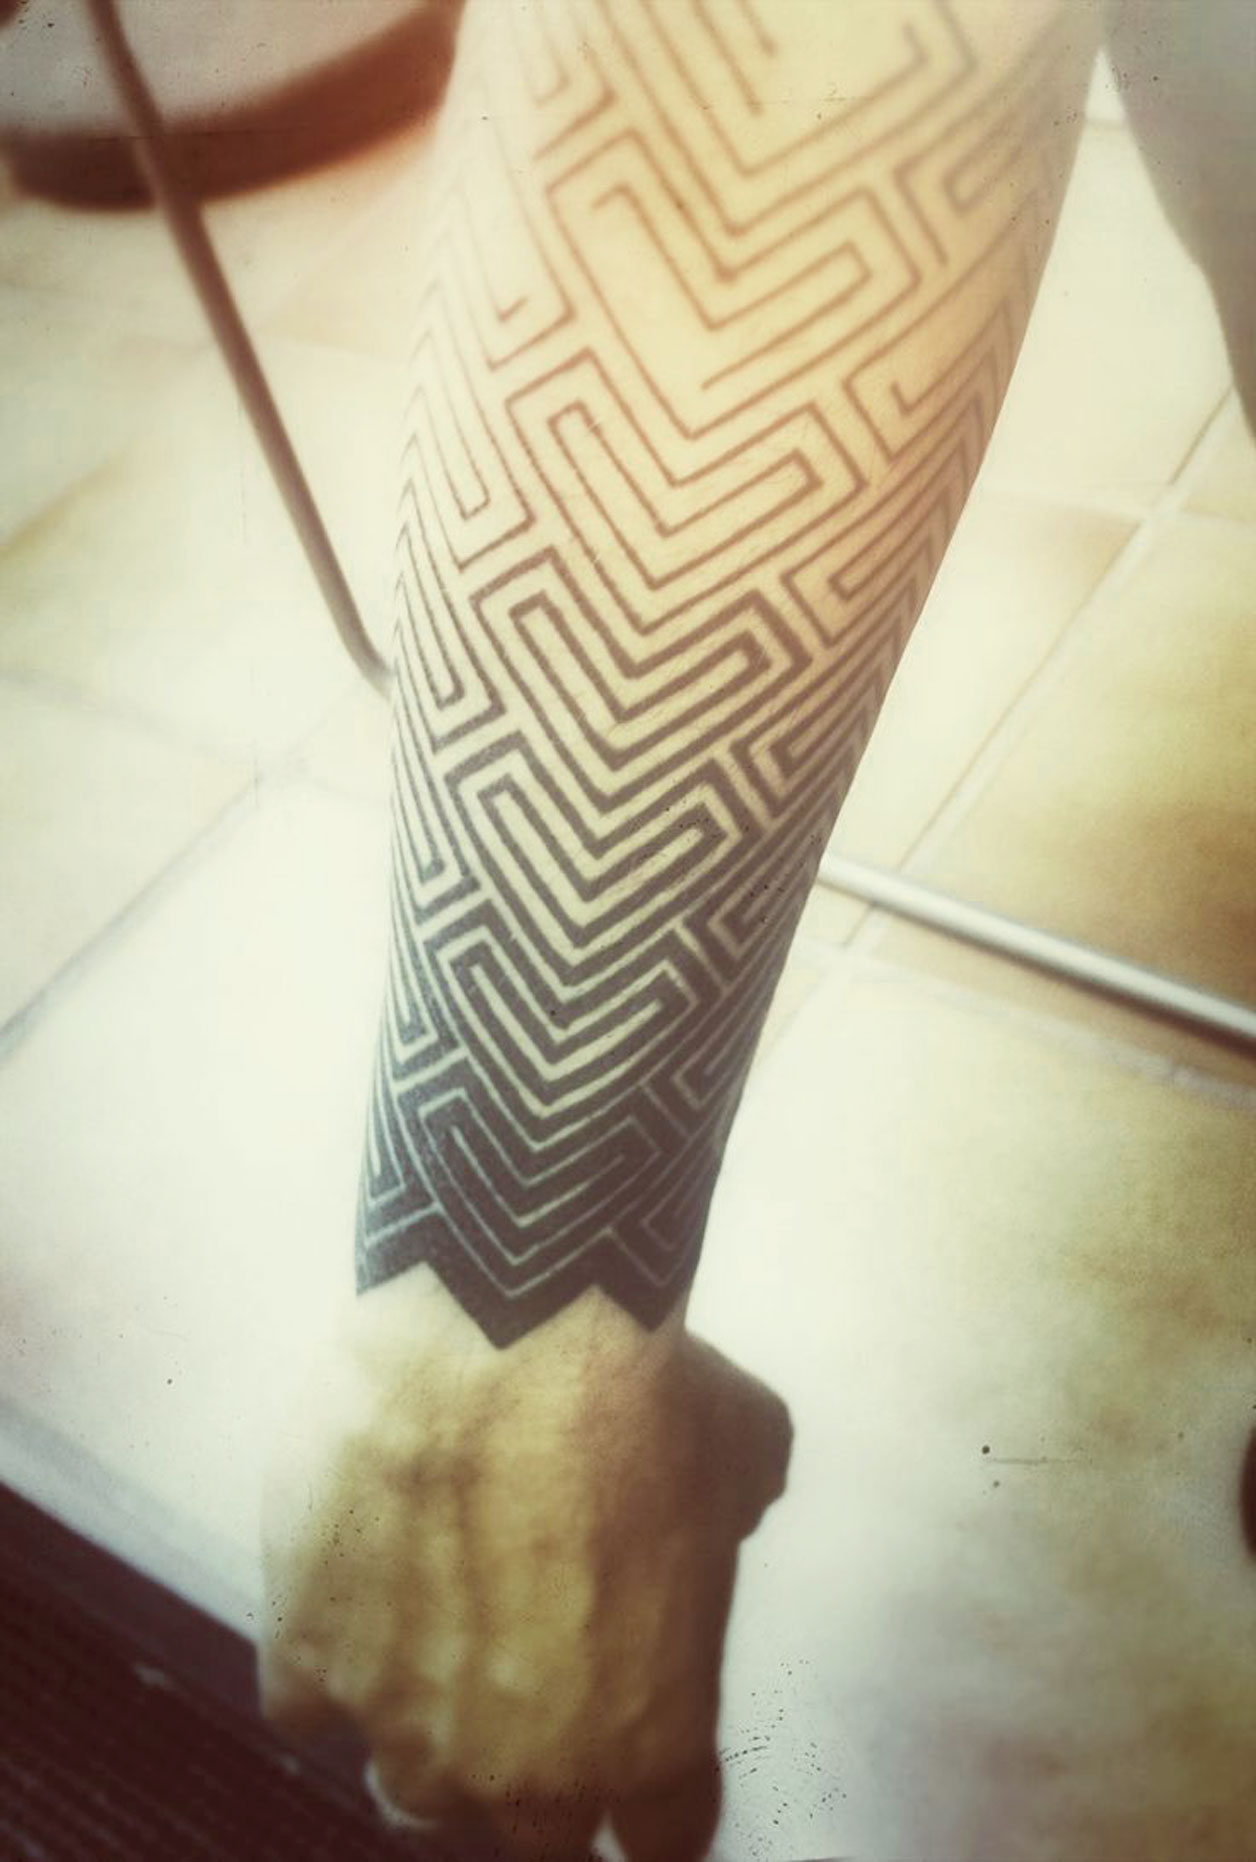 geometric-deer-tattoo-2014